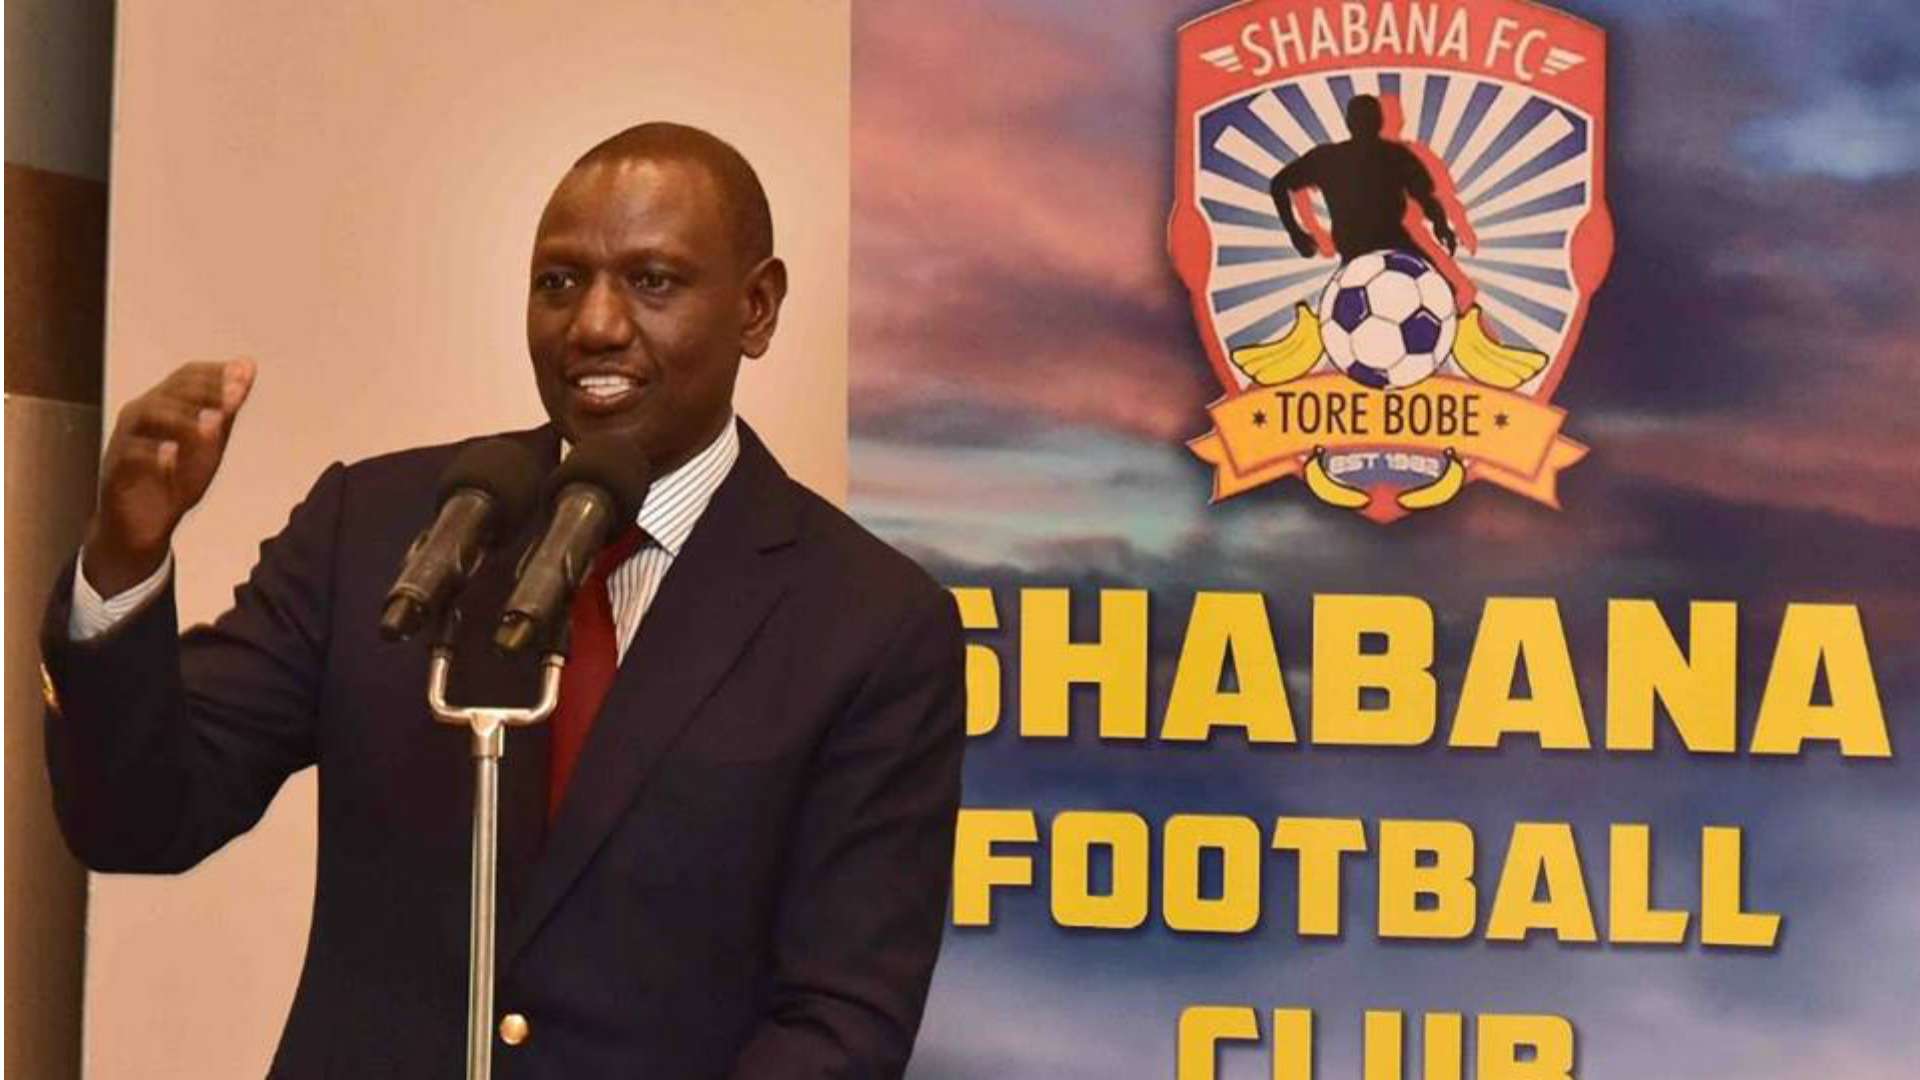 William Ruto and Shabana FC.